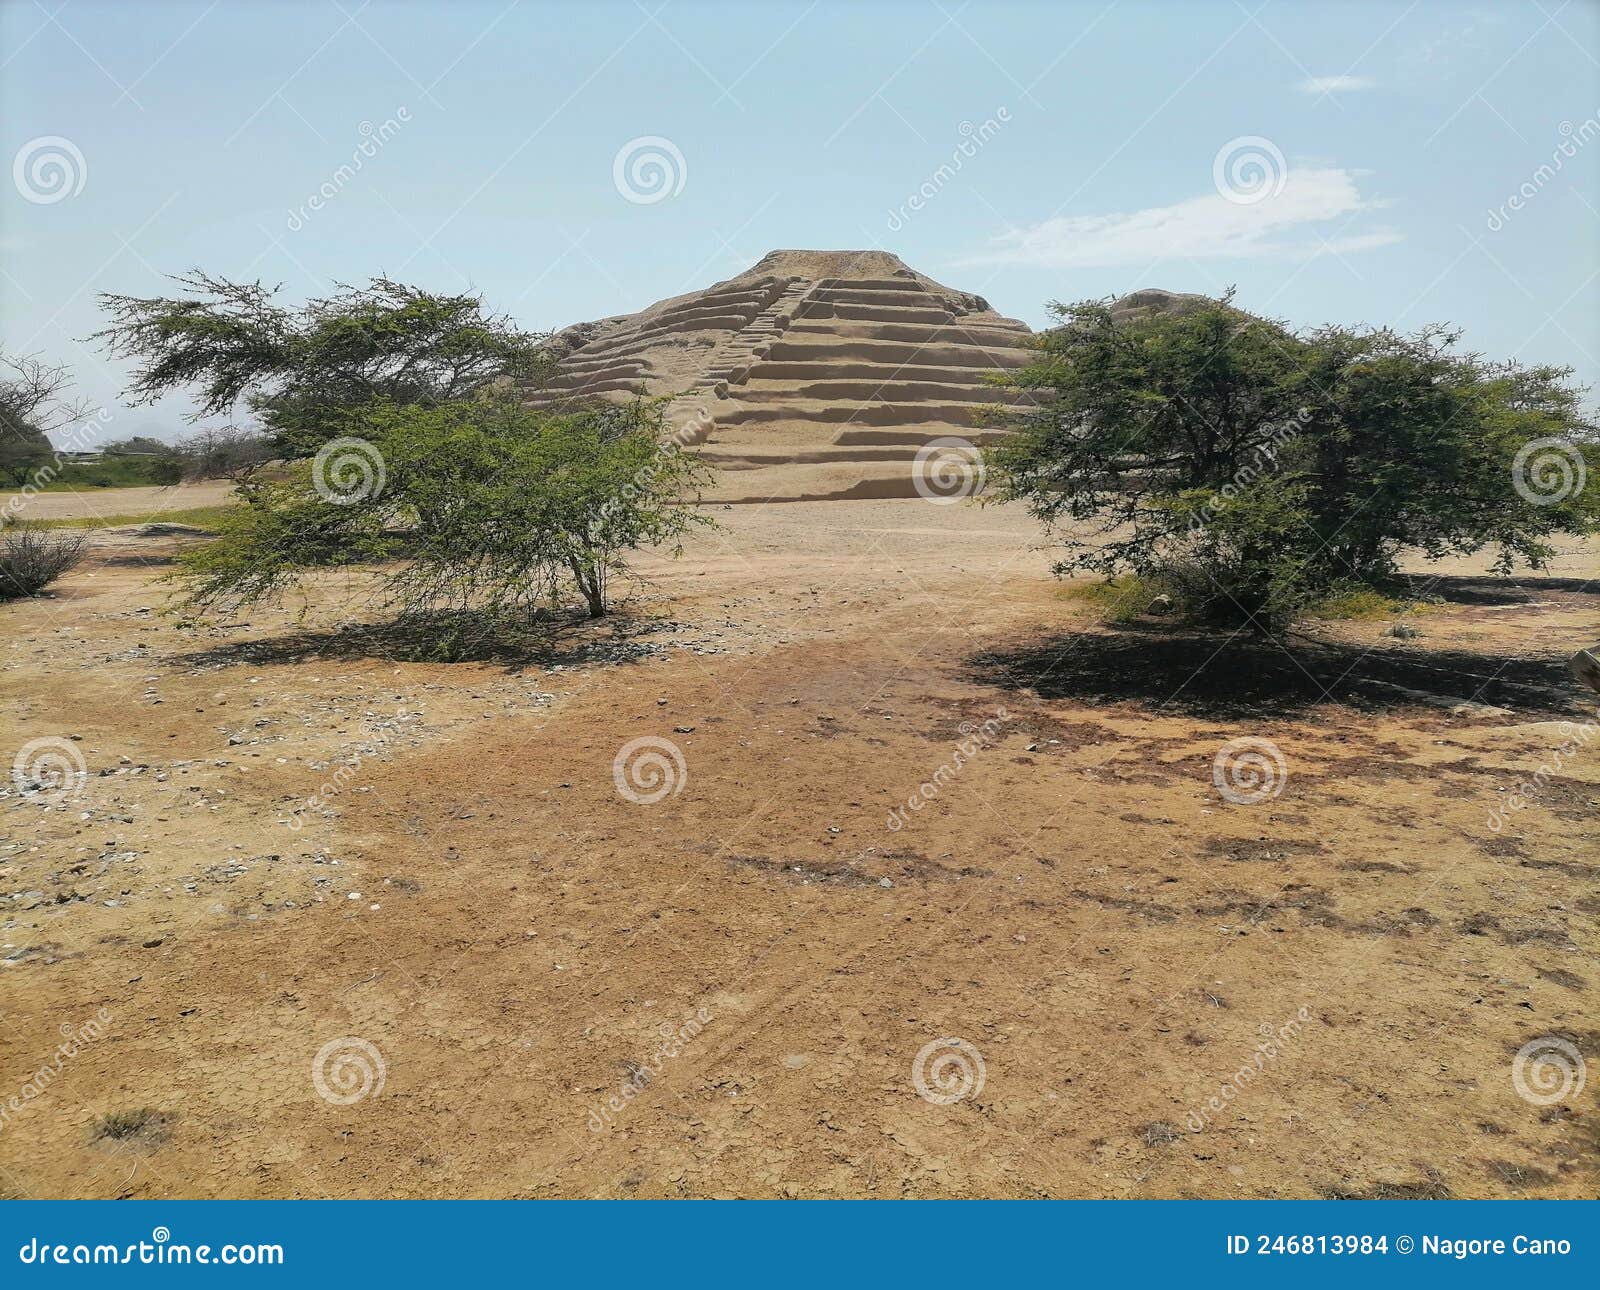 ancient pyramid of chan chan in la libertad, peru.